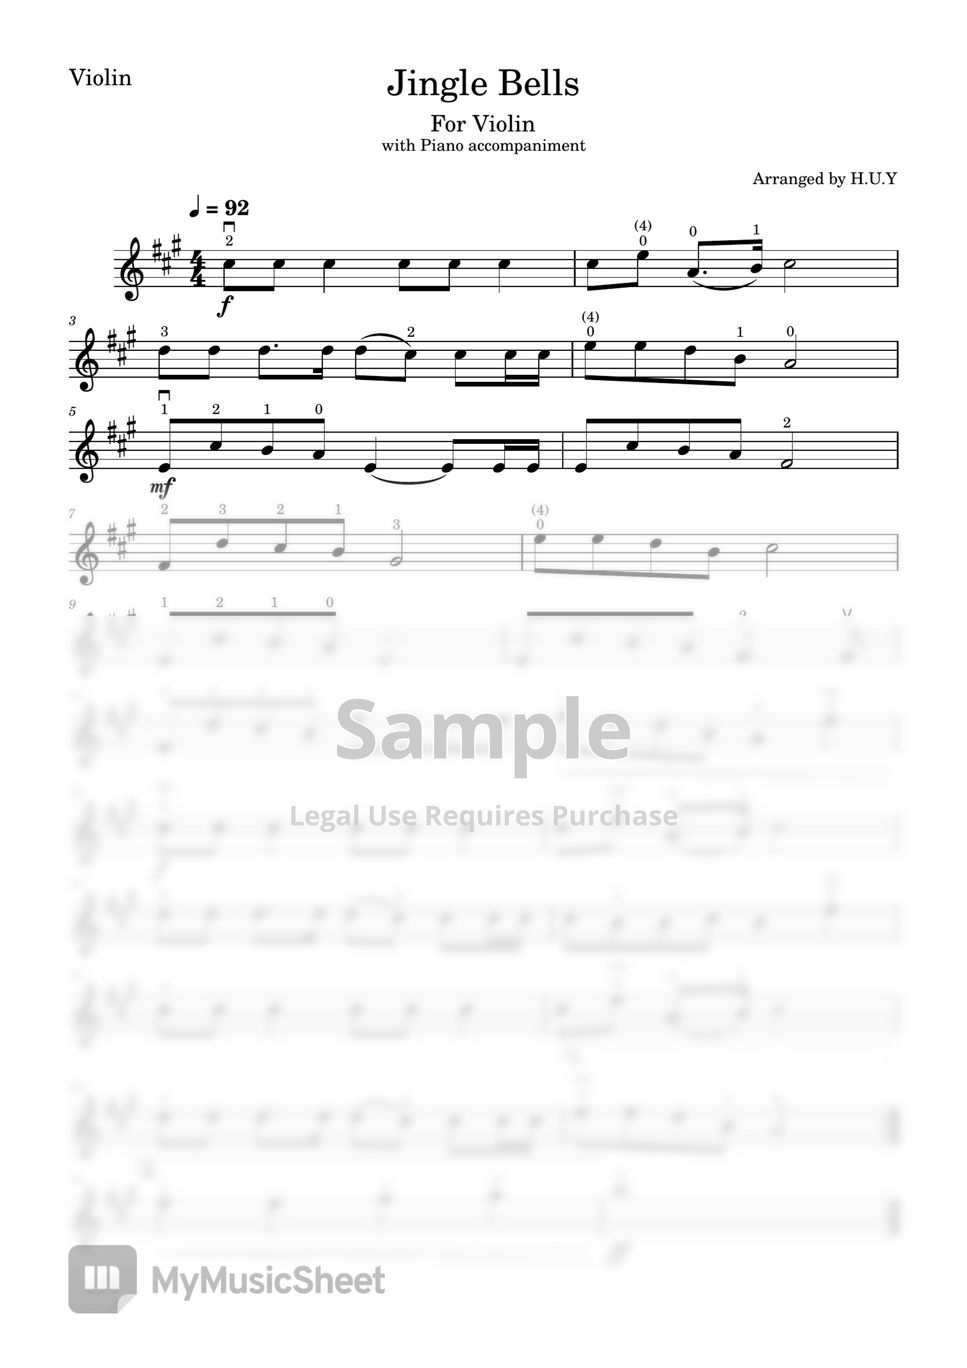 Jingle Bells (For Violin) by H.U.Y